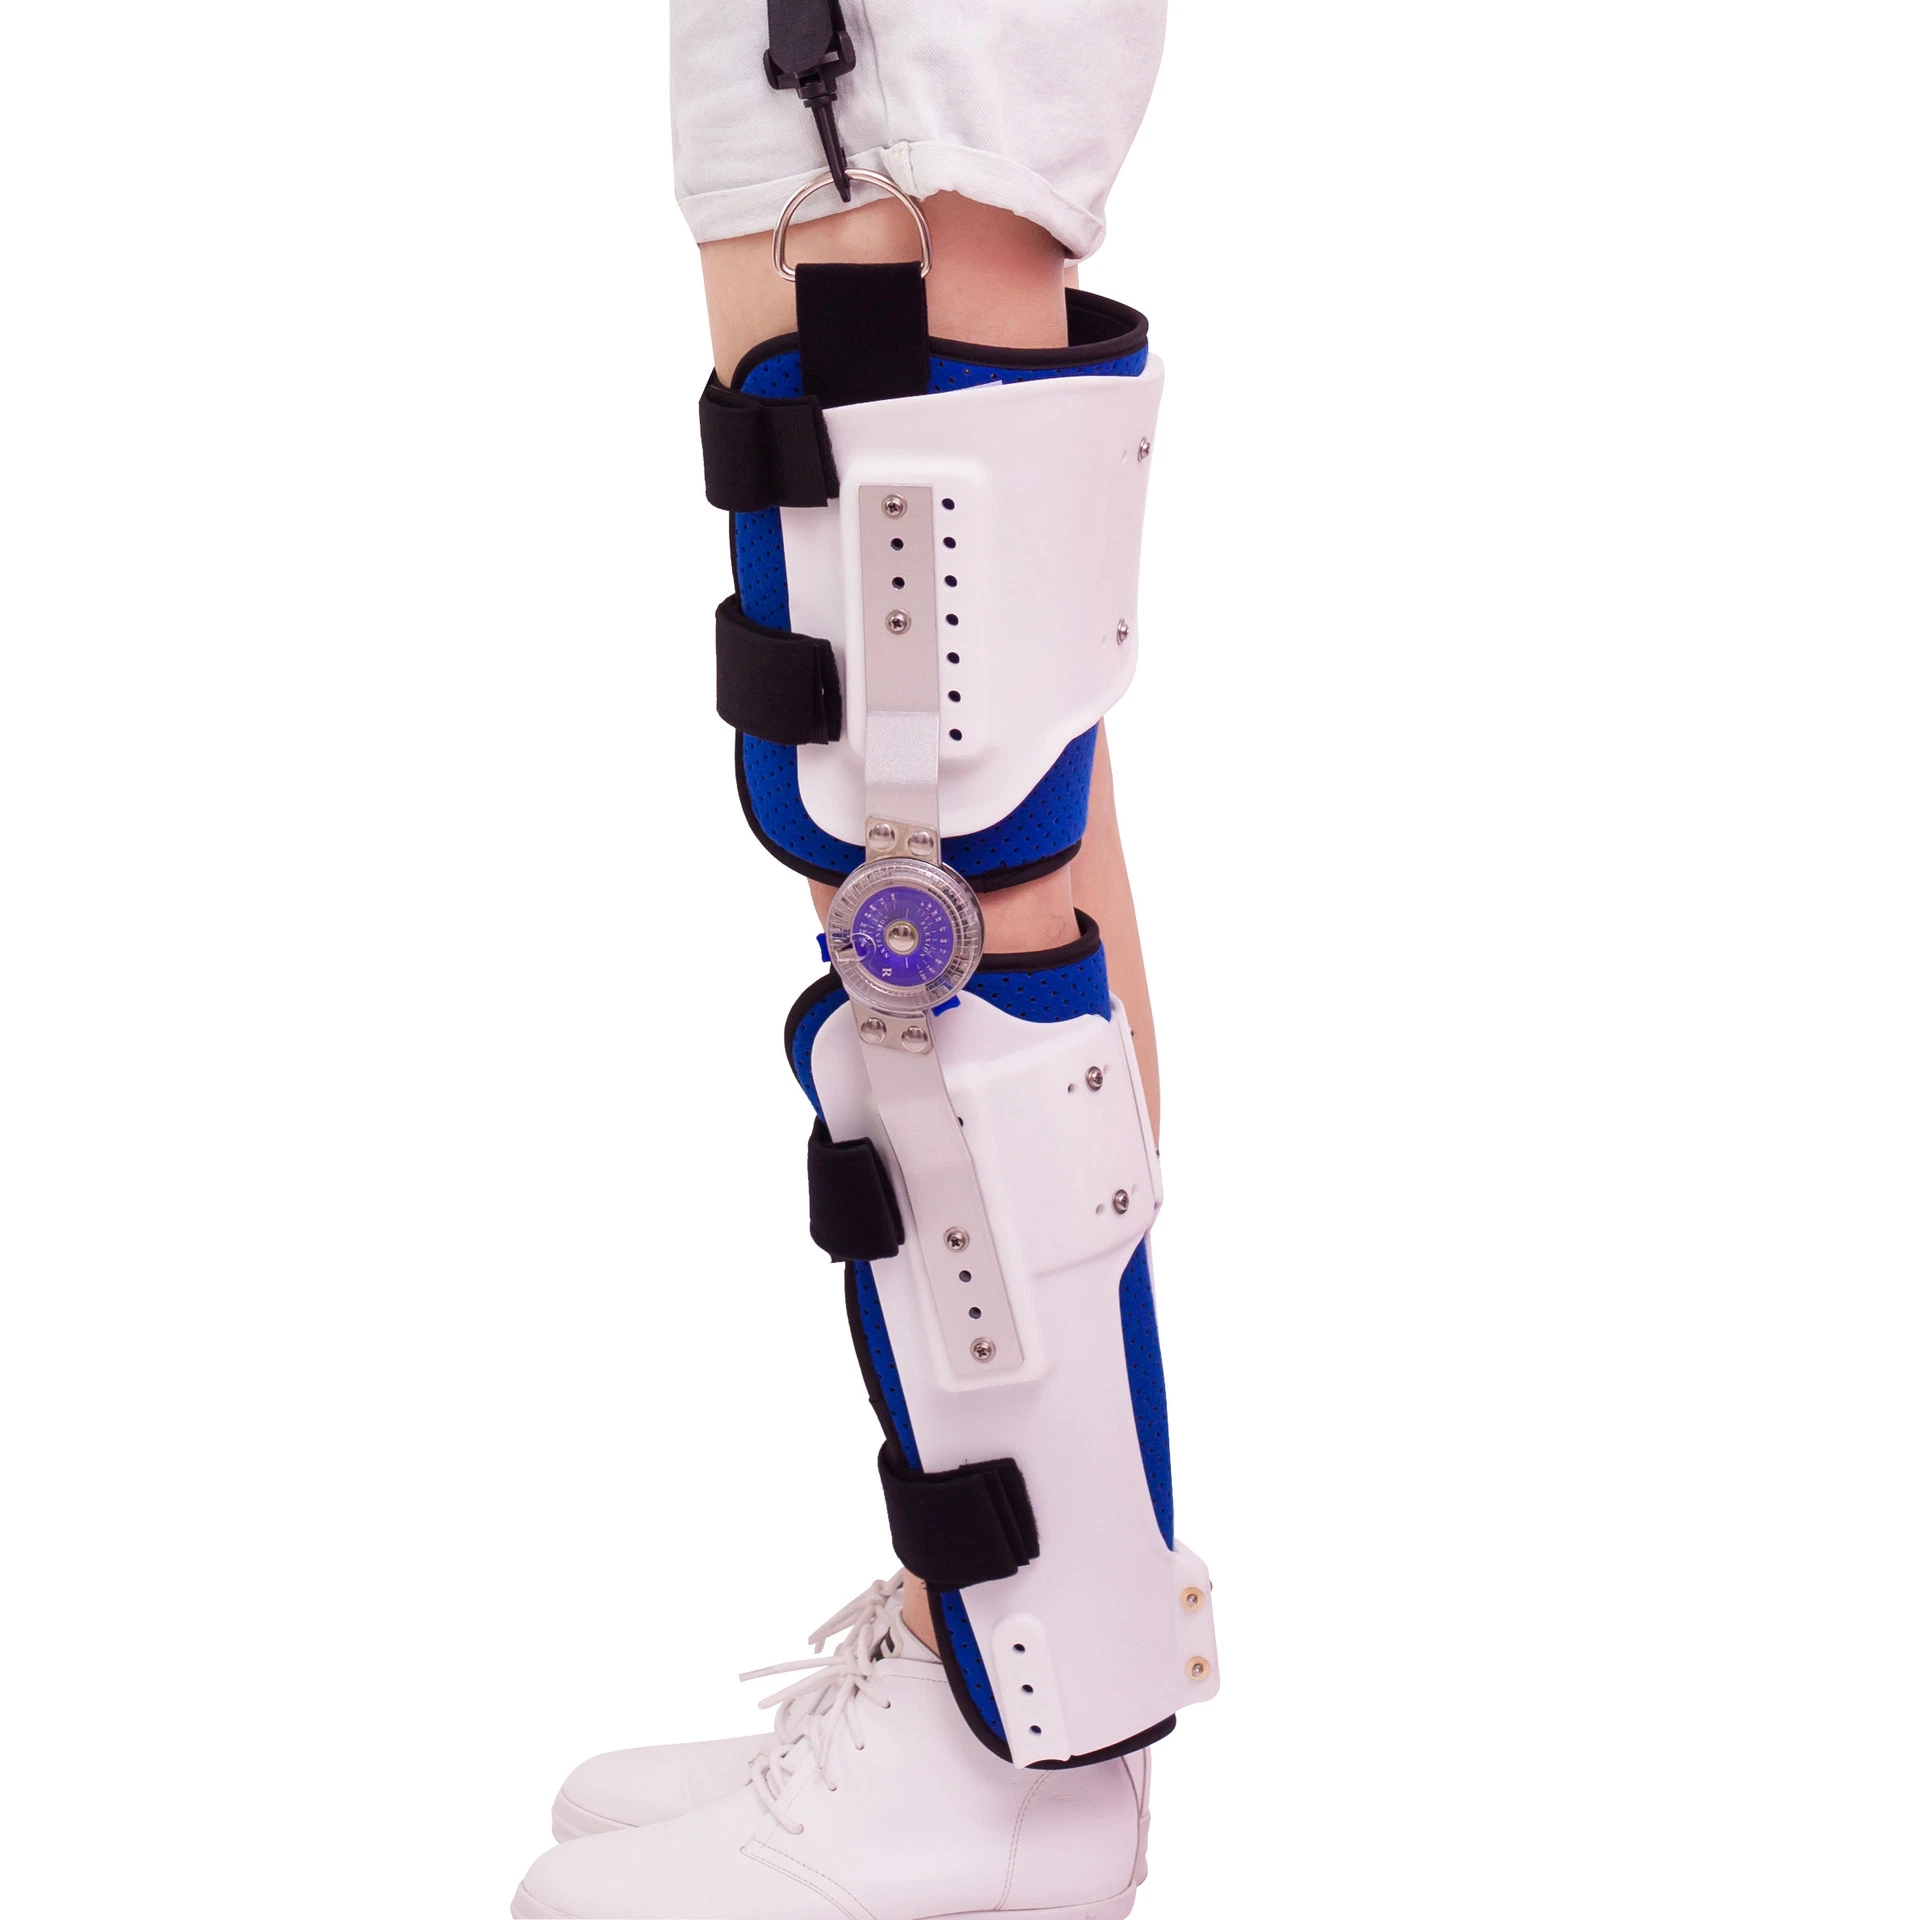 Knee Ankle Foot Orthosis Knee Joint Support Leg Fracture Orthopedic Knee Ankle Foot Orthosis Brace Splint